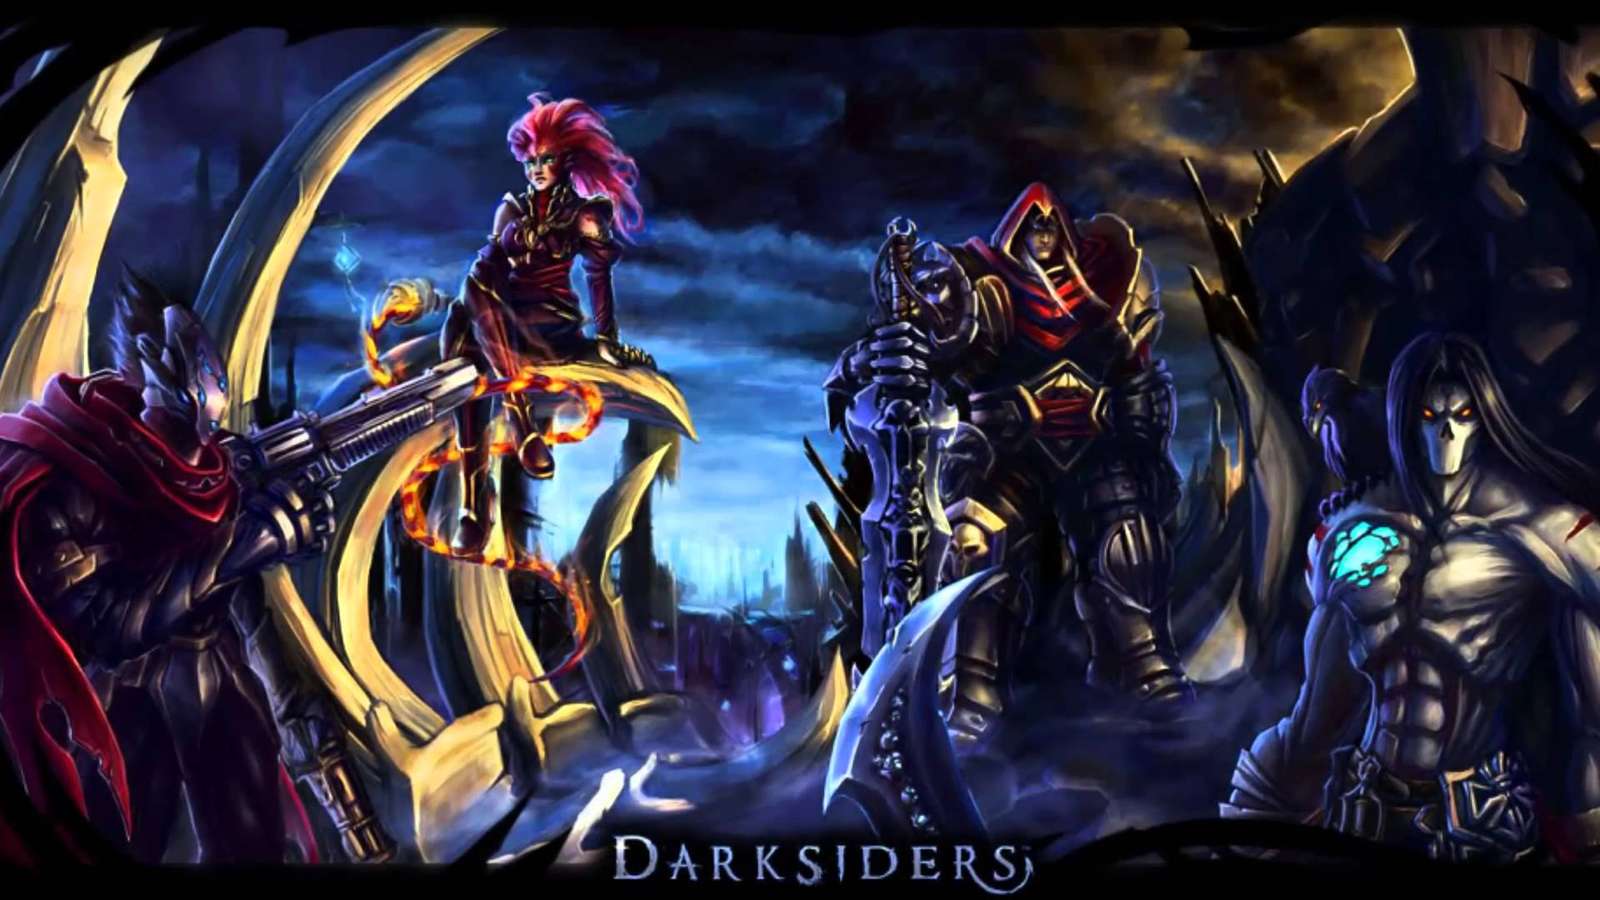 Darksiders - 4 lovas kirakós online